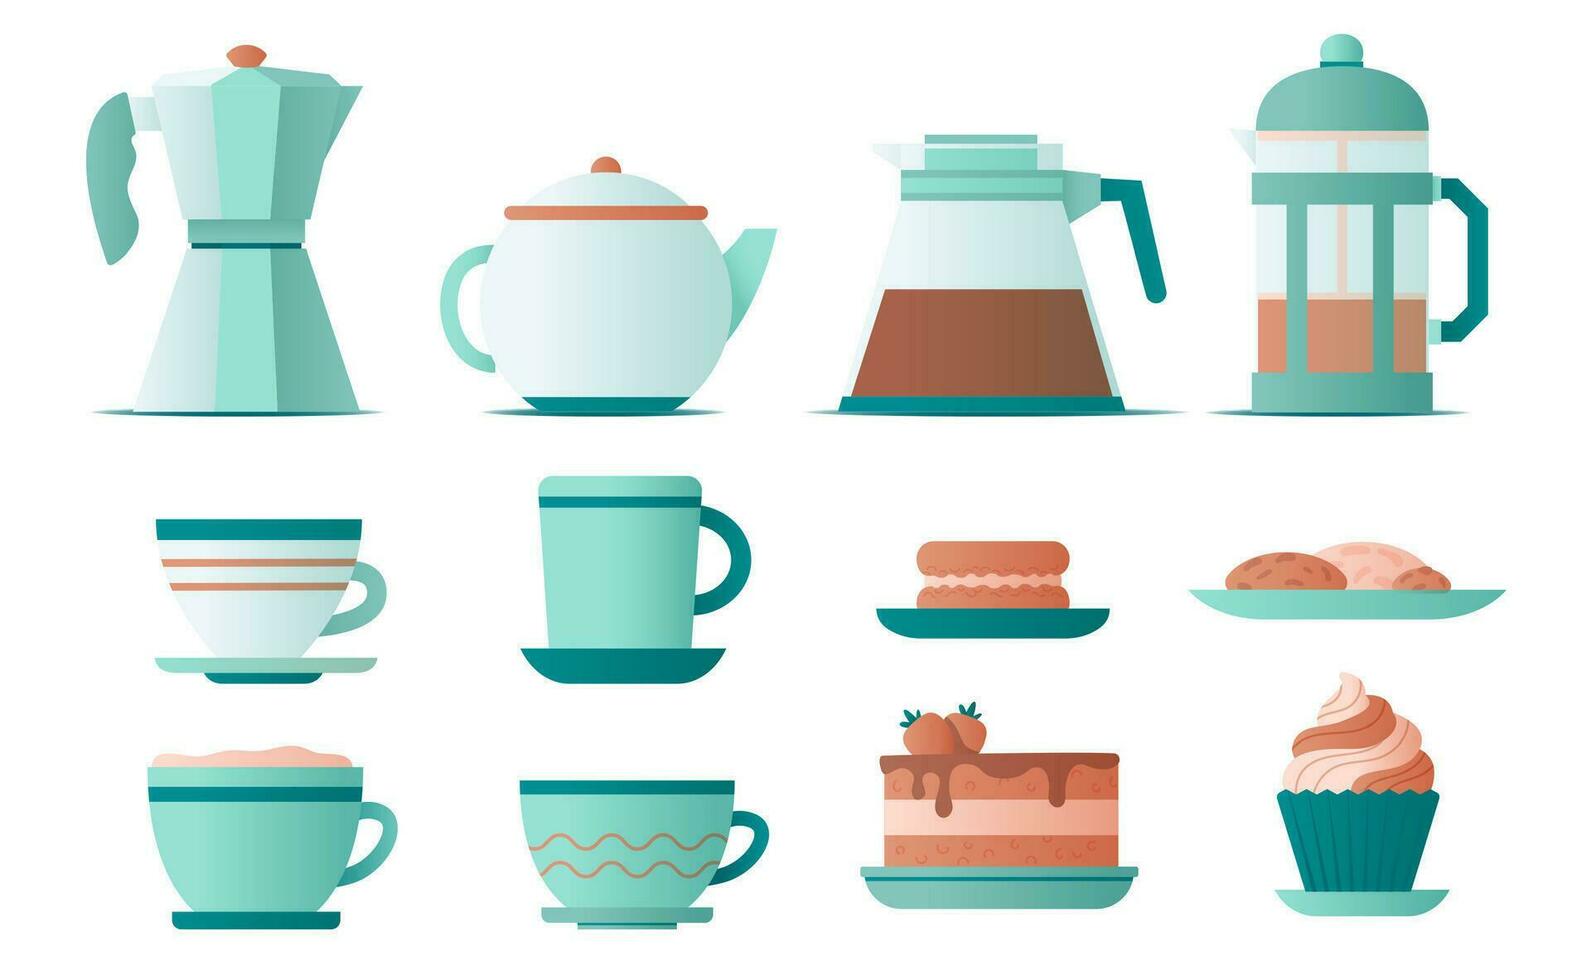 diferente tazas, café hervidores y dulce postre. jarra té café, francés prensa, géiser café fabricante tomar lejos caliente bebidas plano vector ilustración.